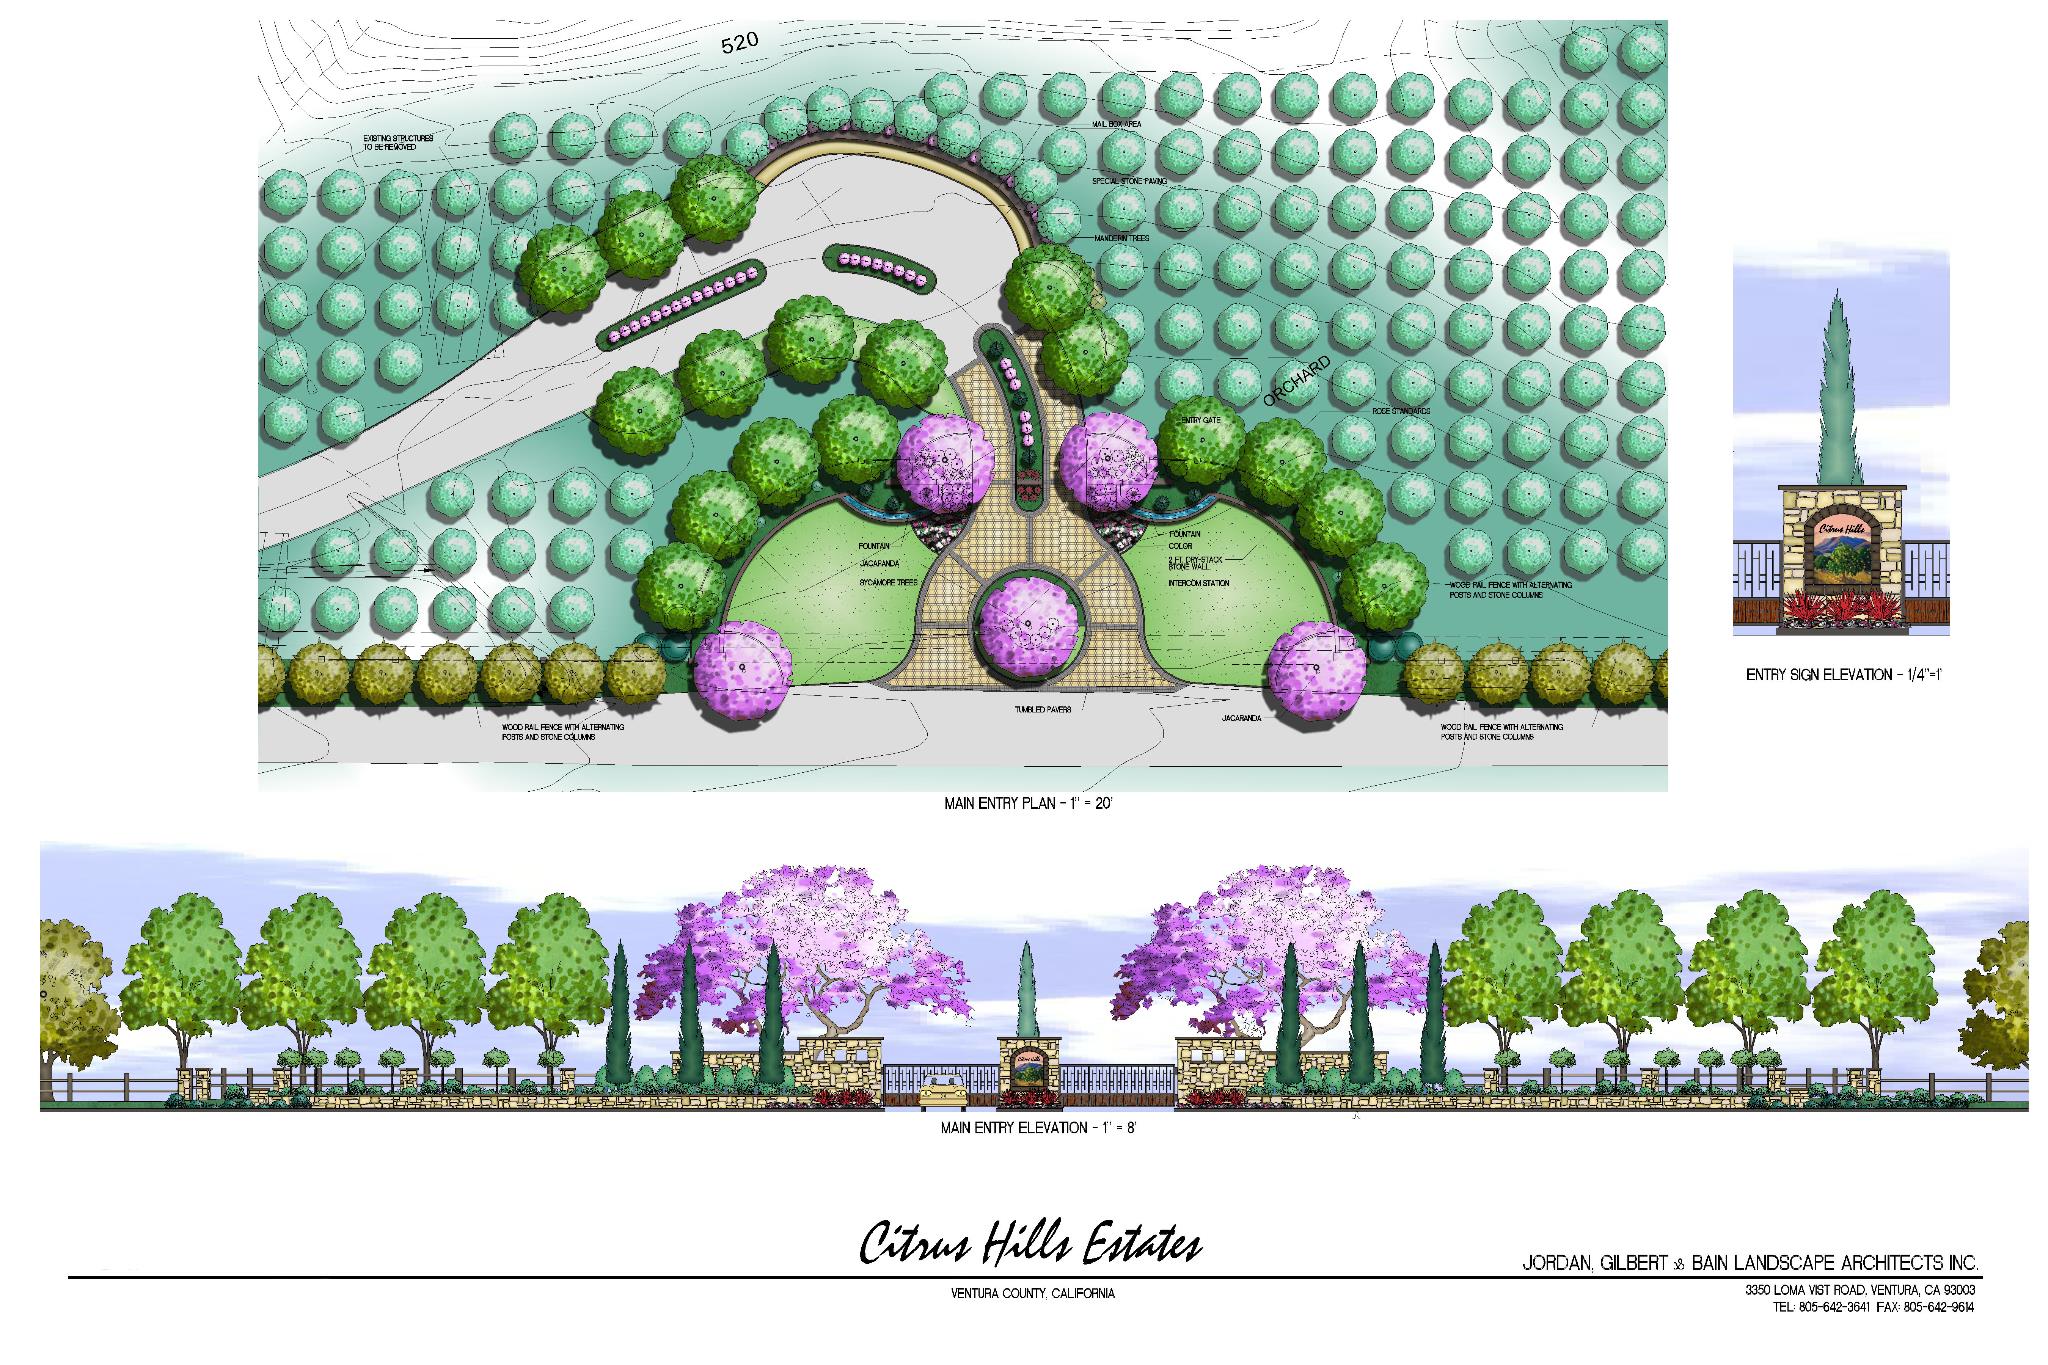 Jordan, Gilbert & Bain Landscape Architects Inc., Ventura California